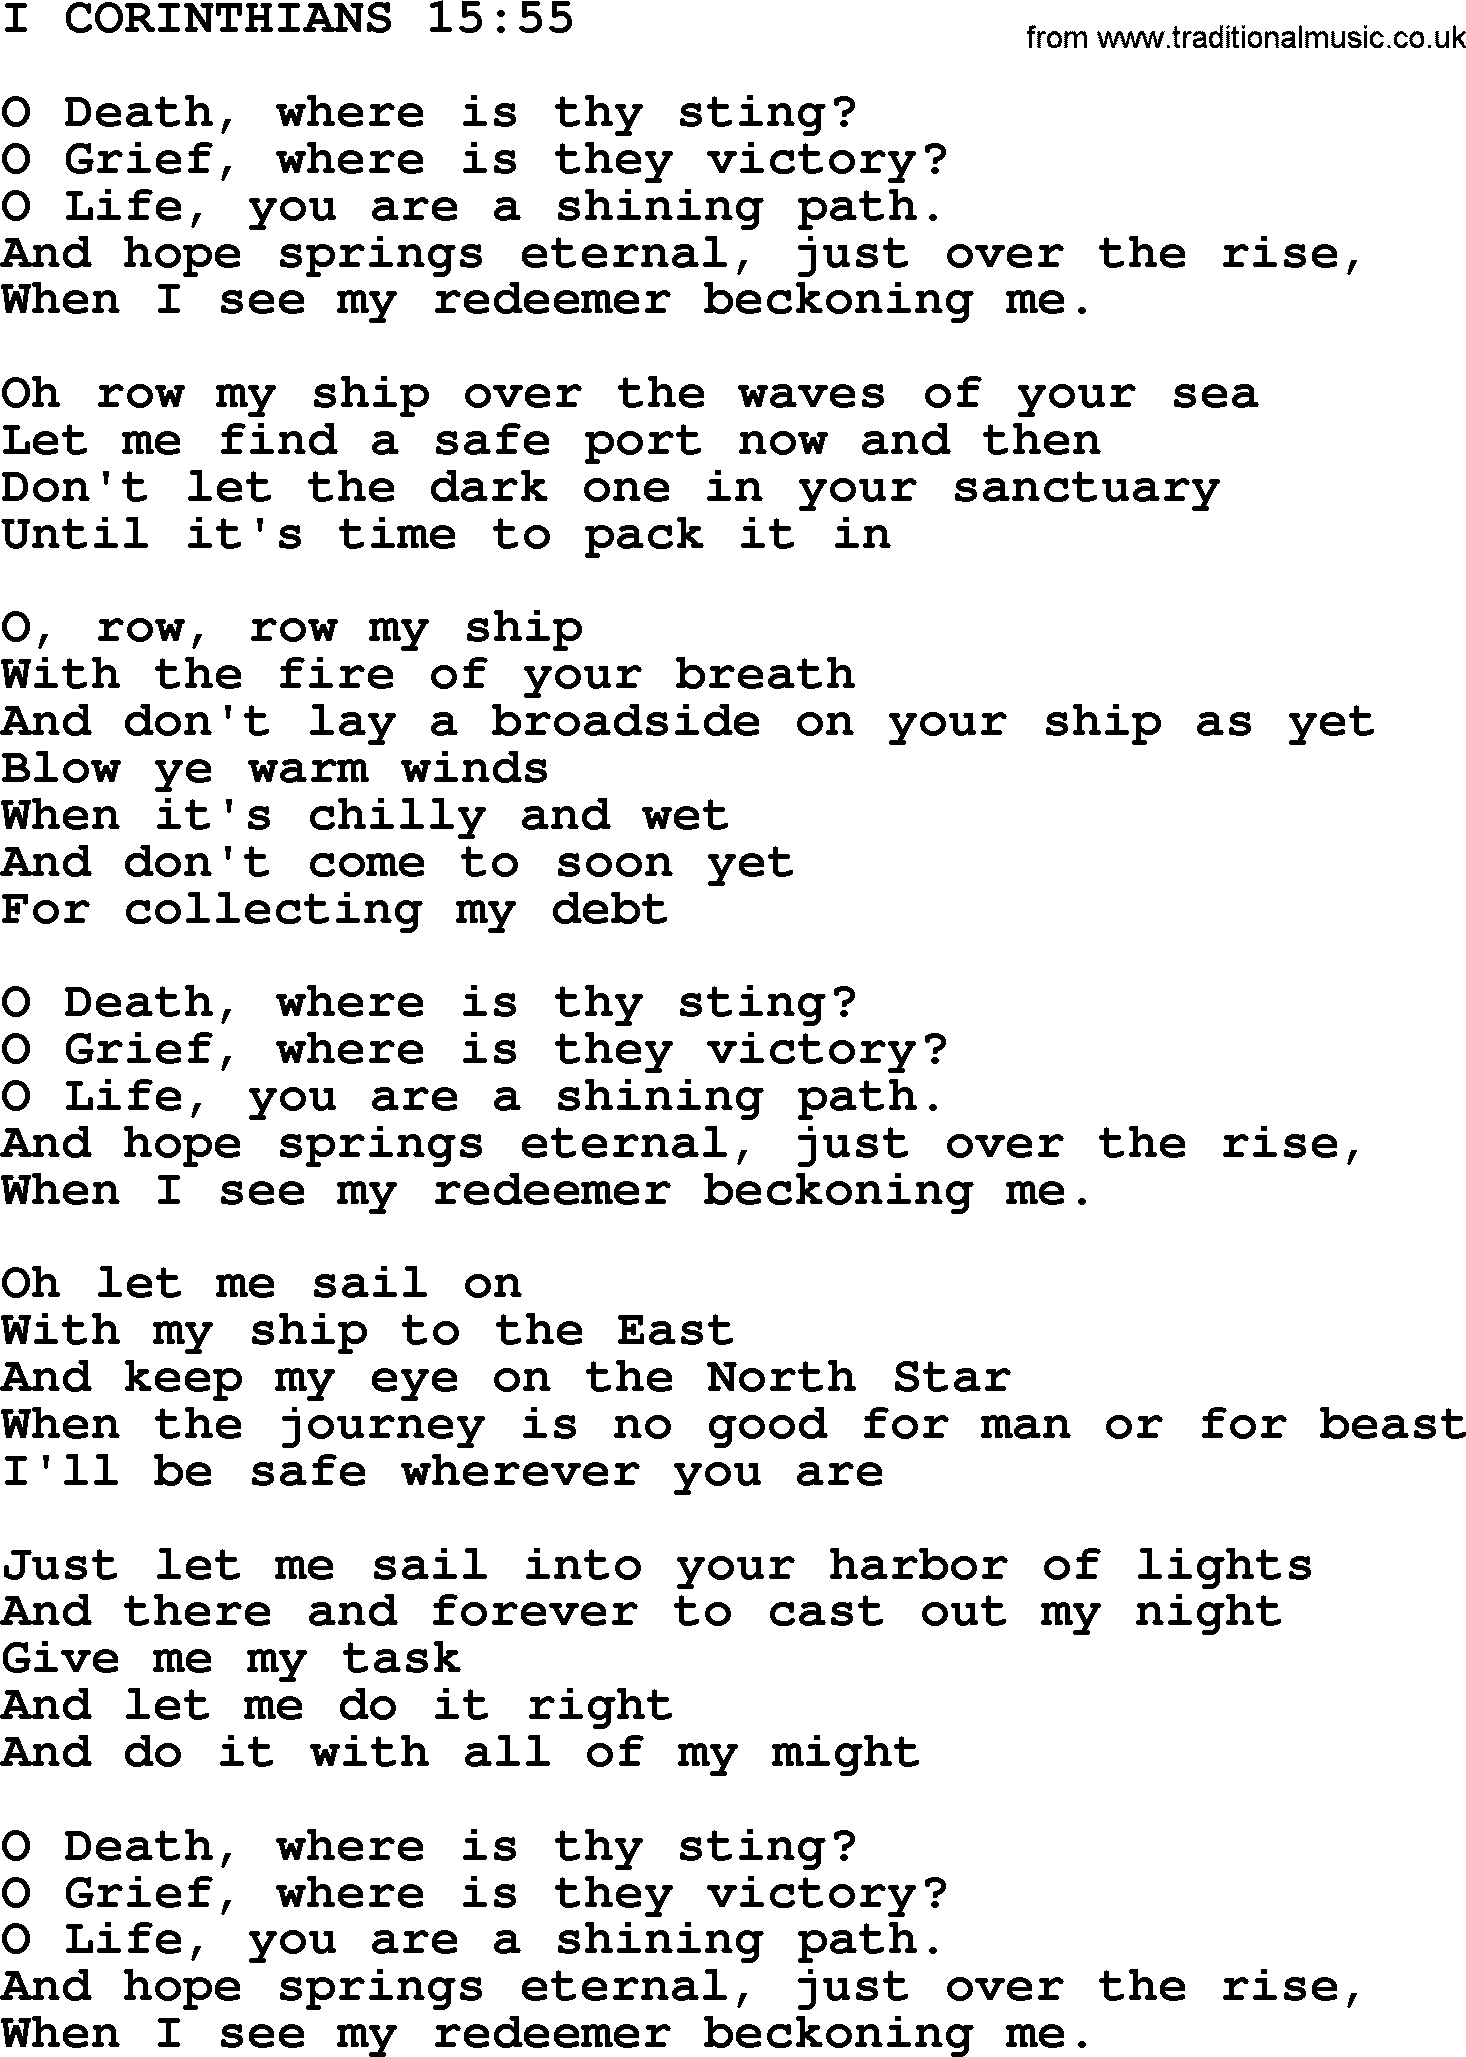 Johnny Cash song I Corinthians 15-55.txt lyrics